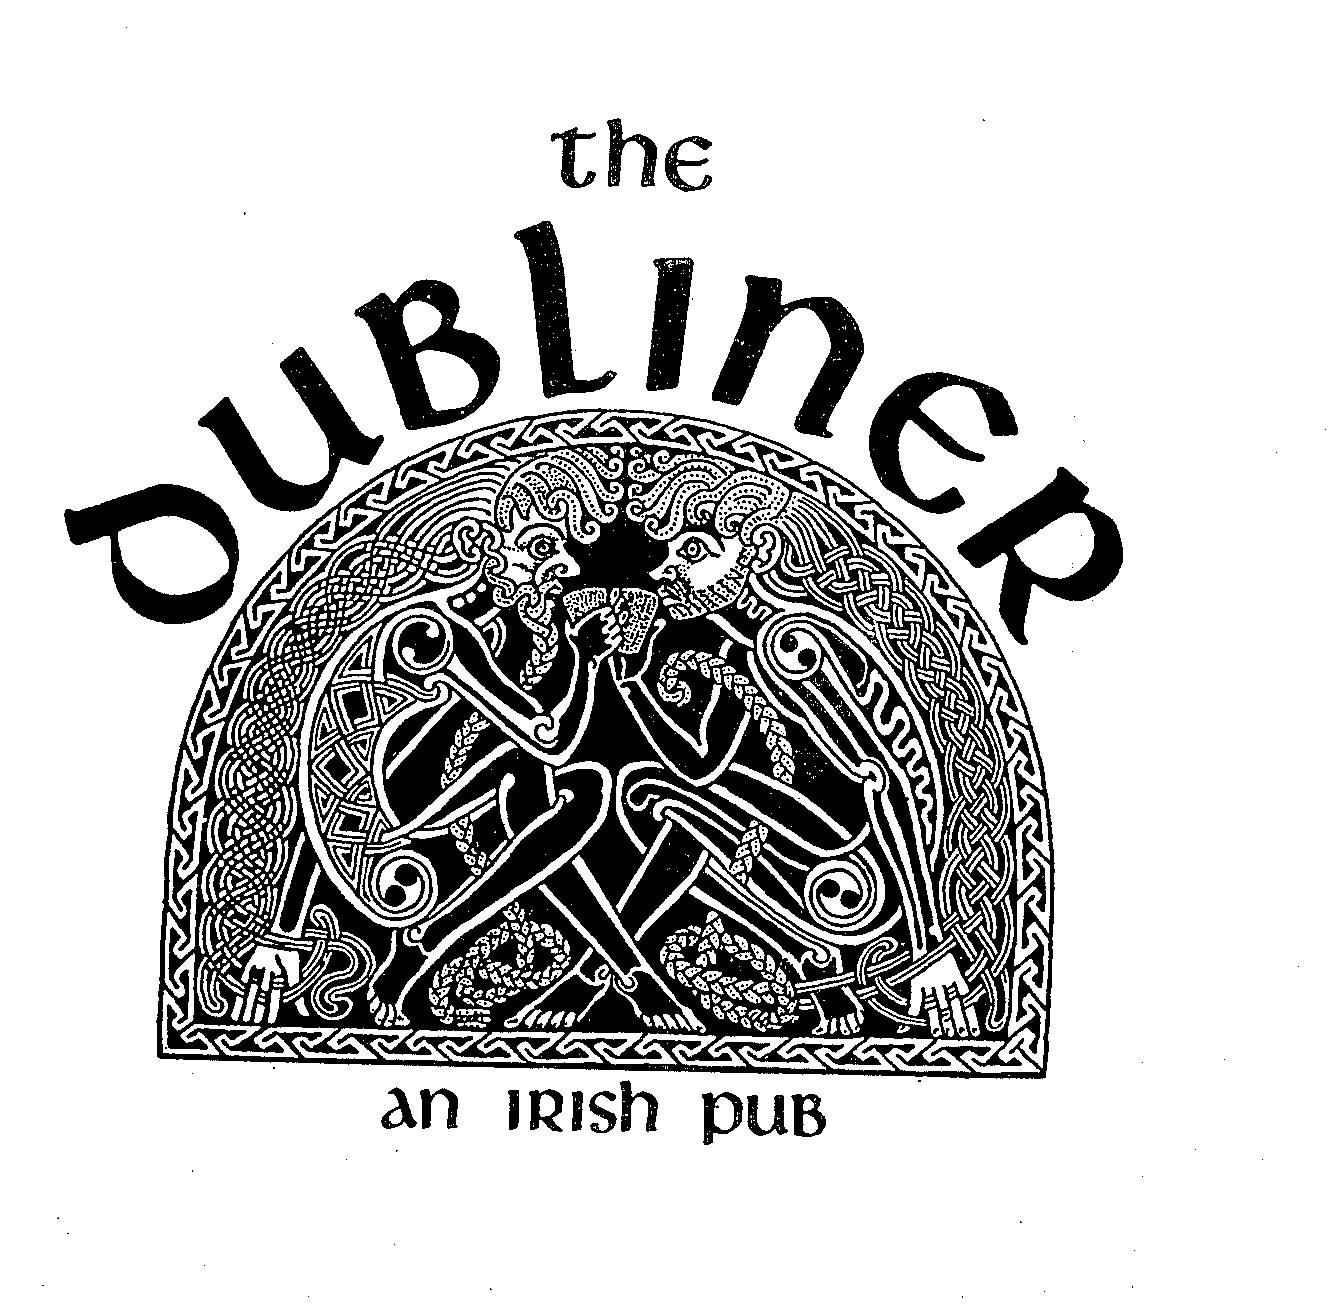  THE DUBLINER AN IRISH PUB